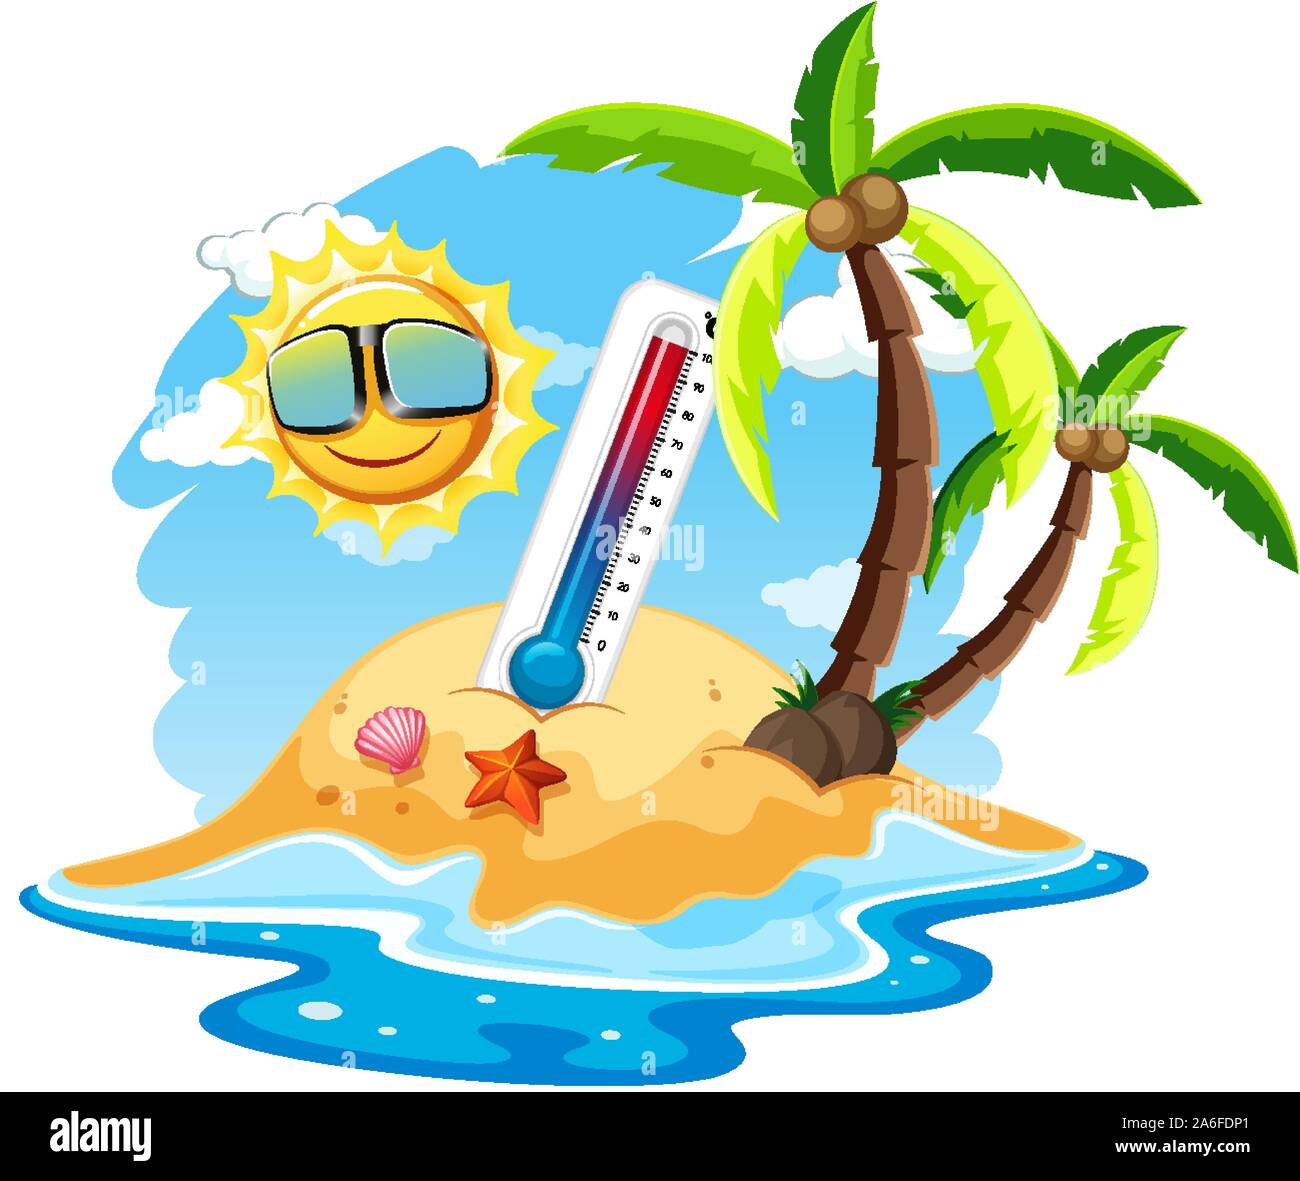 Summer season with island in the sun illustration Stock Vector ...